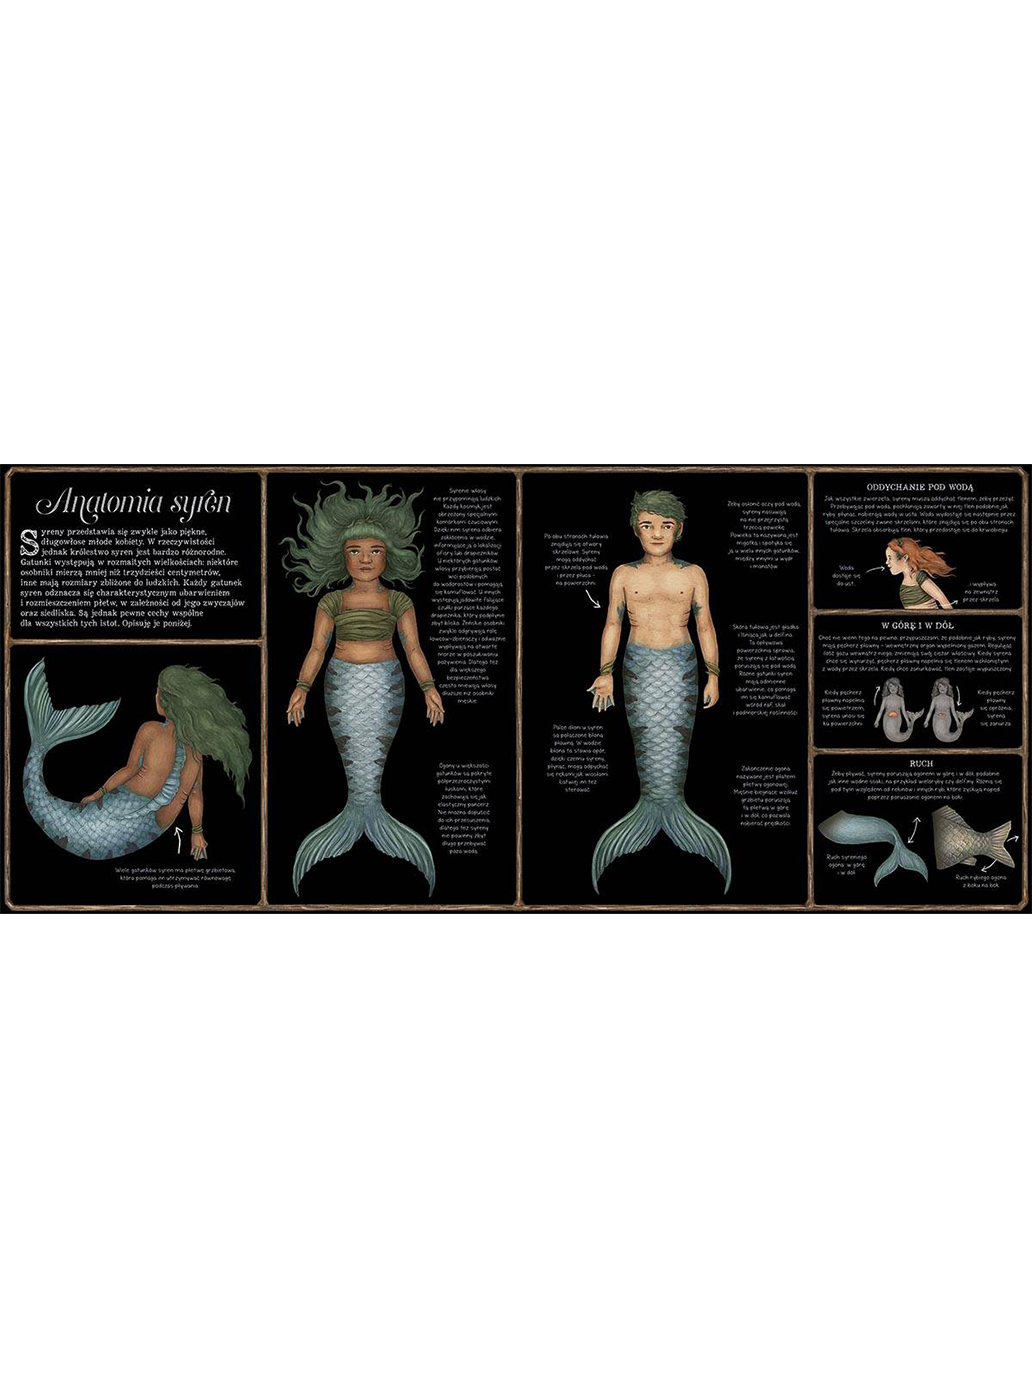 The natural history of mermaids